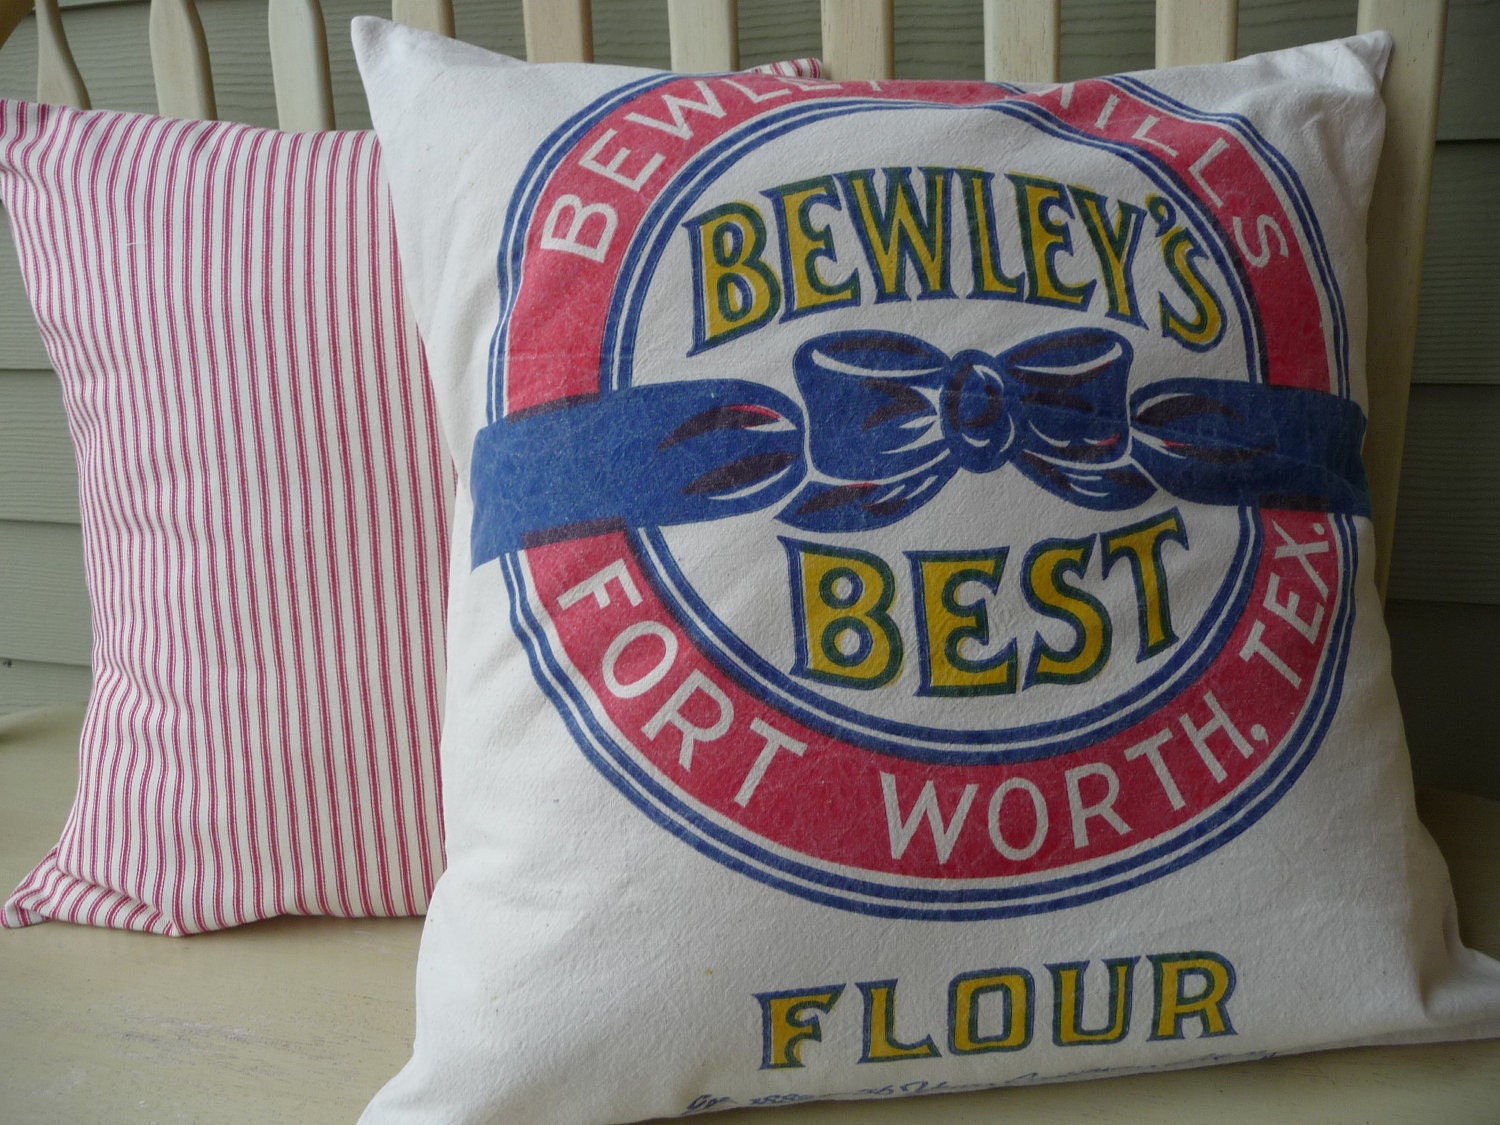 Feed Sack Pillow Cover - Floursack Pillow Cover - Rustic Pillow Cover - Bewleys Best Pillow Cover -  Reproduction Fabric - 18"